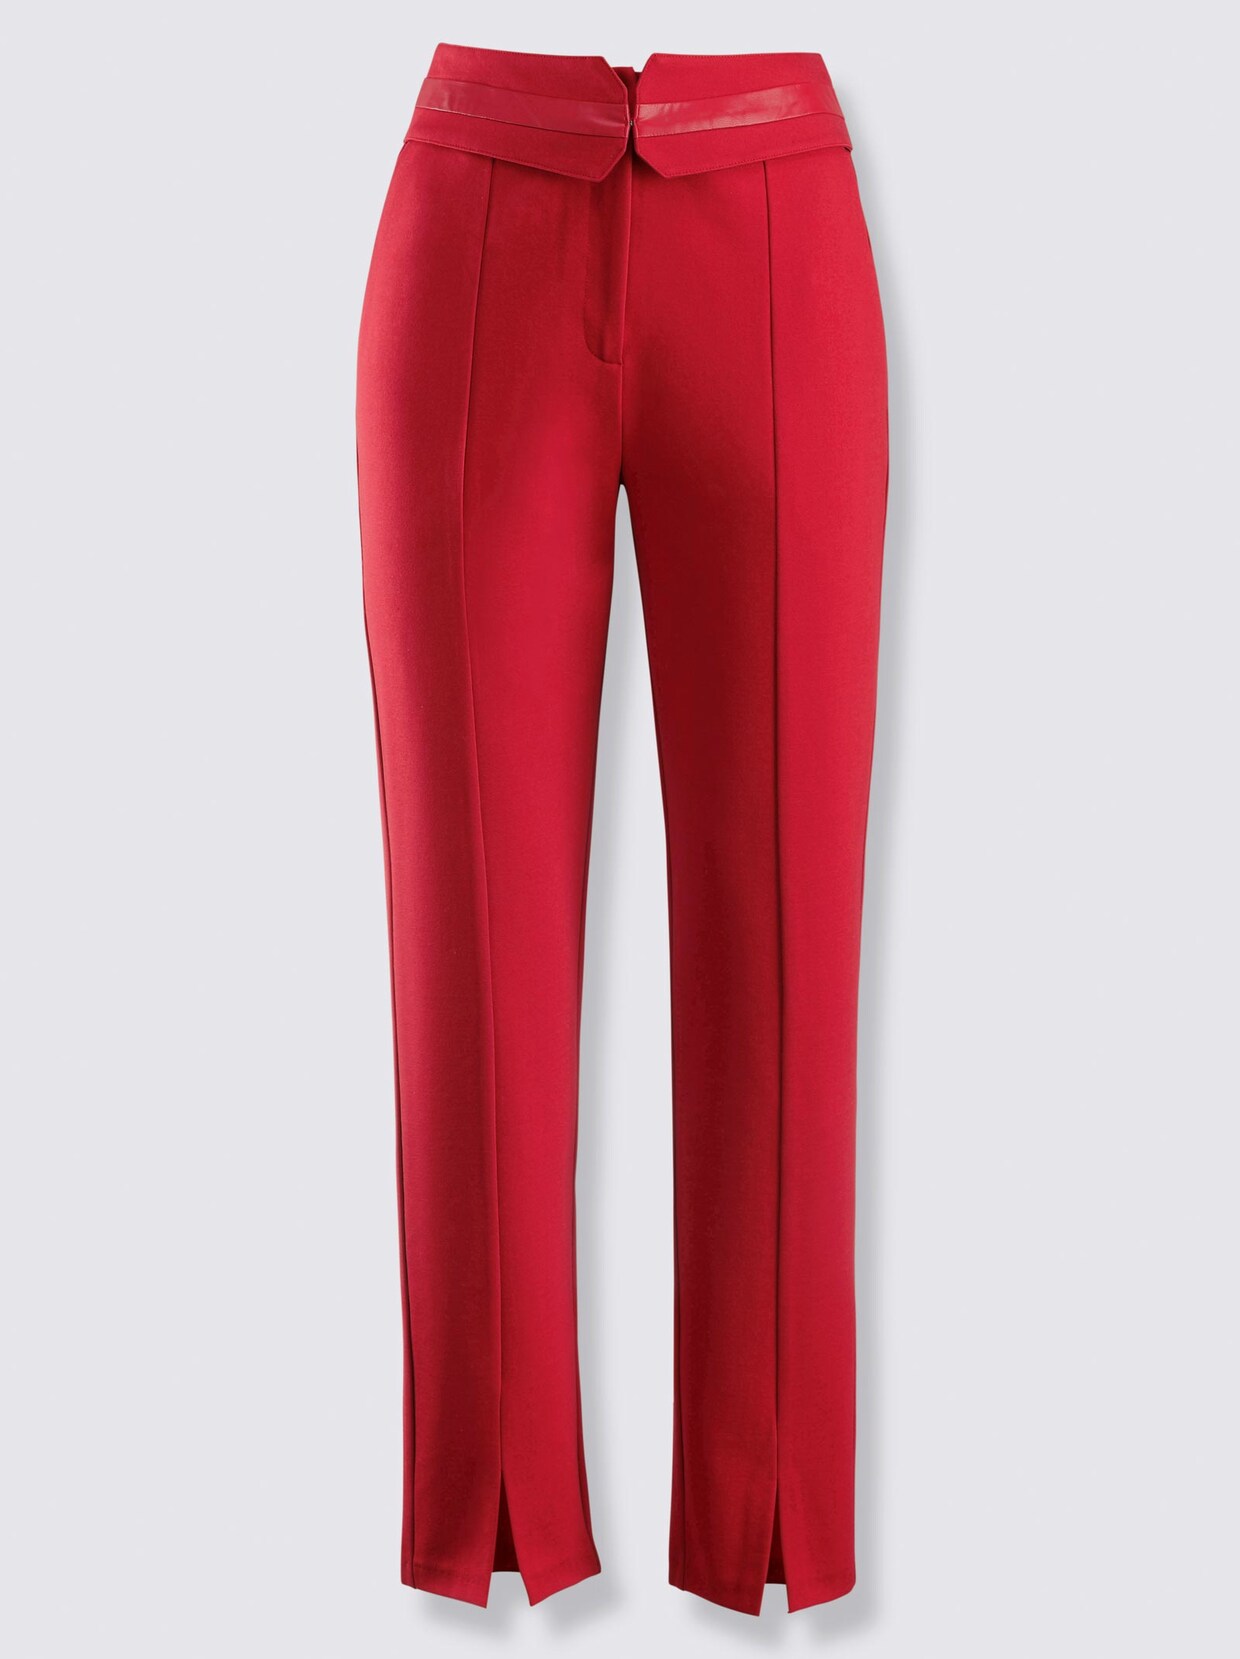 Ashley Brooke Jersey pantalon - rood